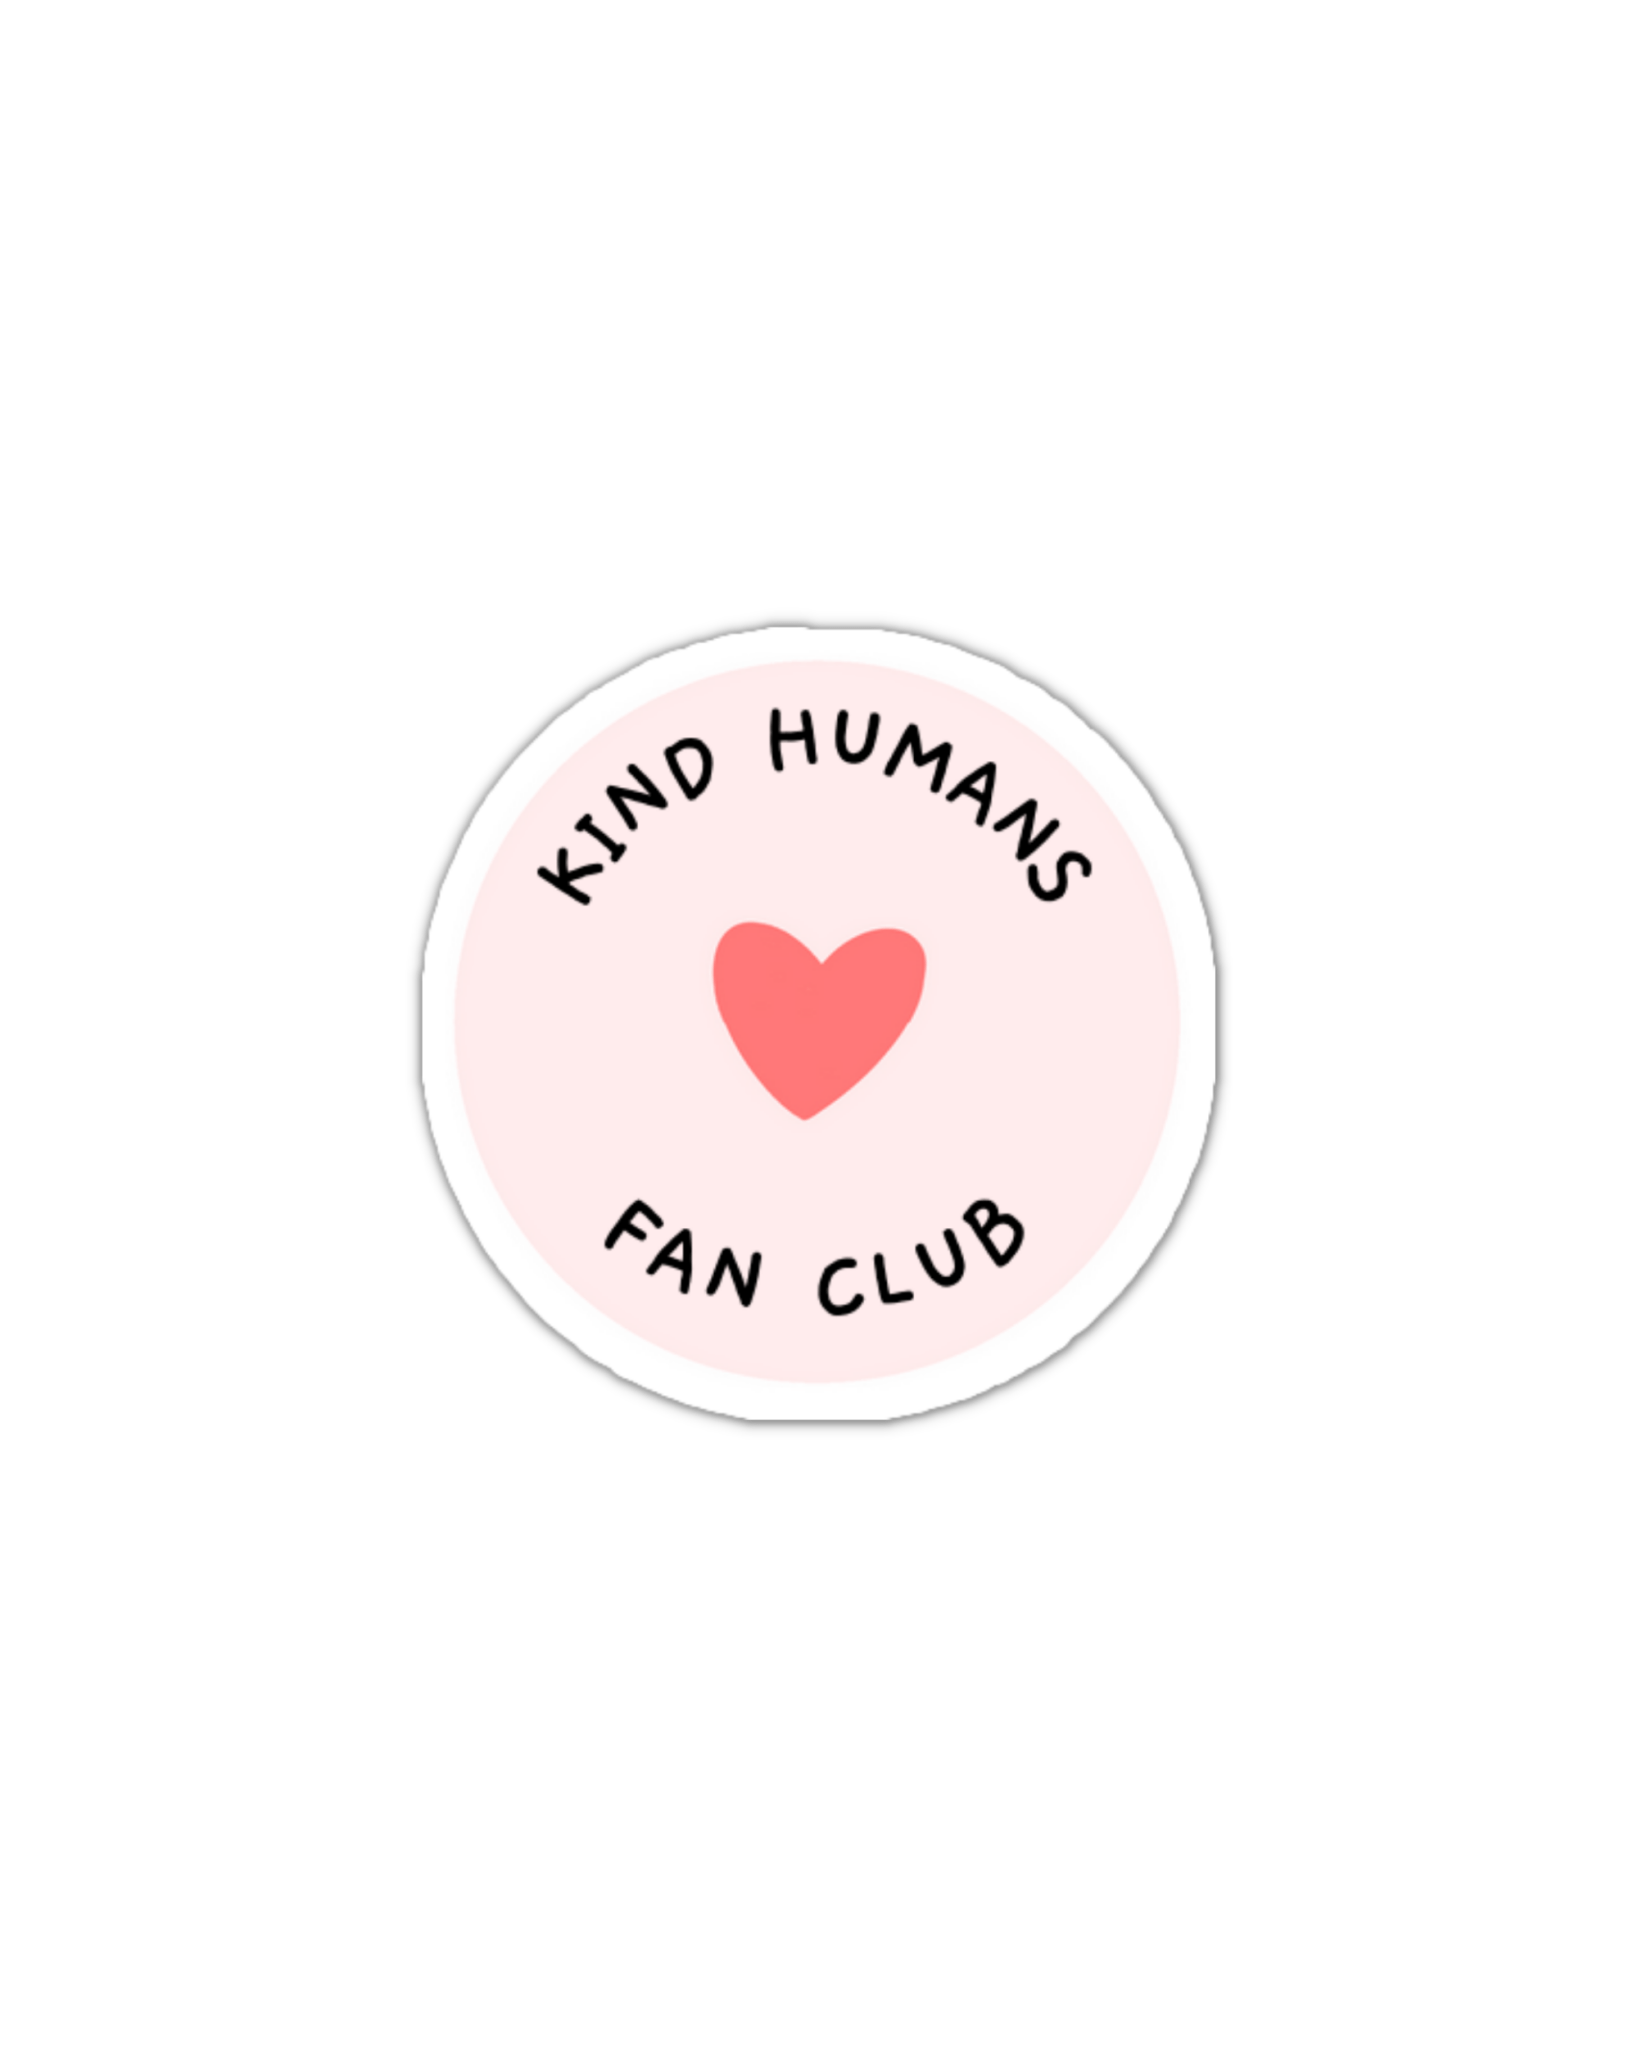 Kind Humans fan club vinyl sticker - Spiral Circle